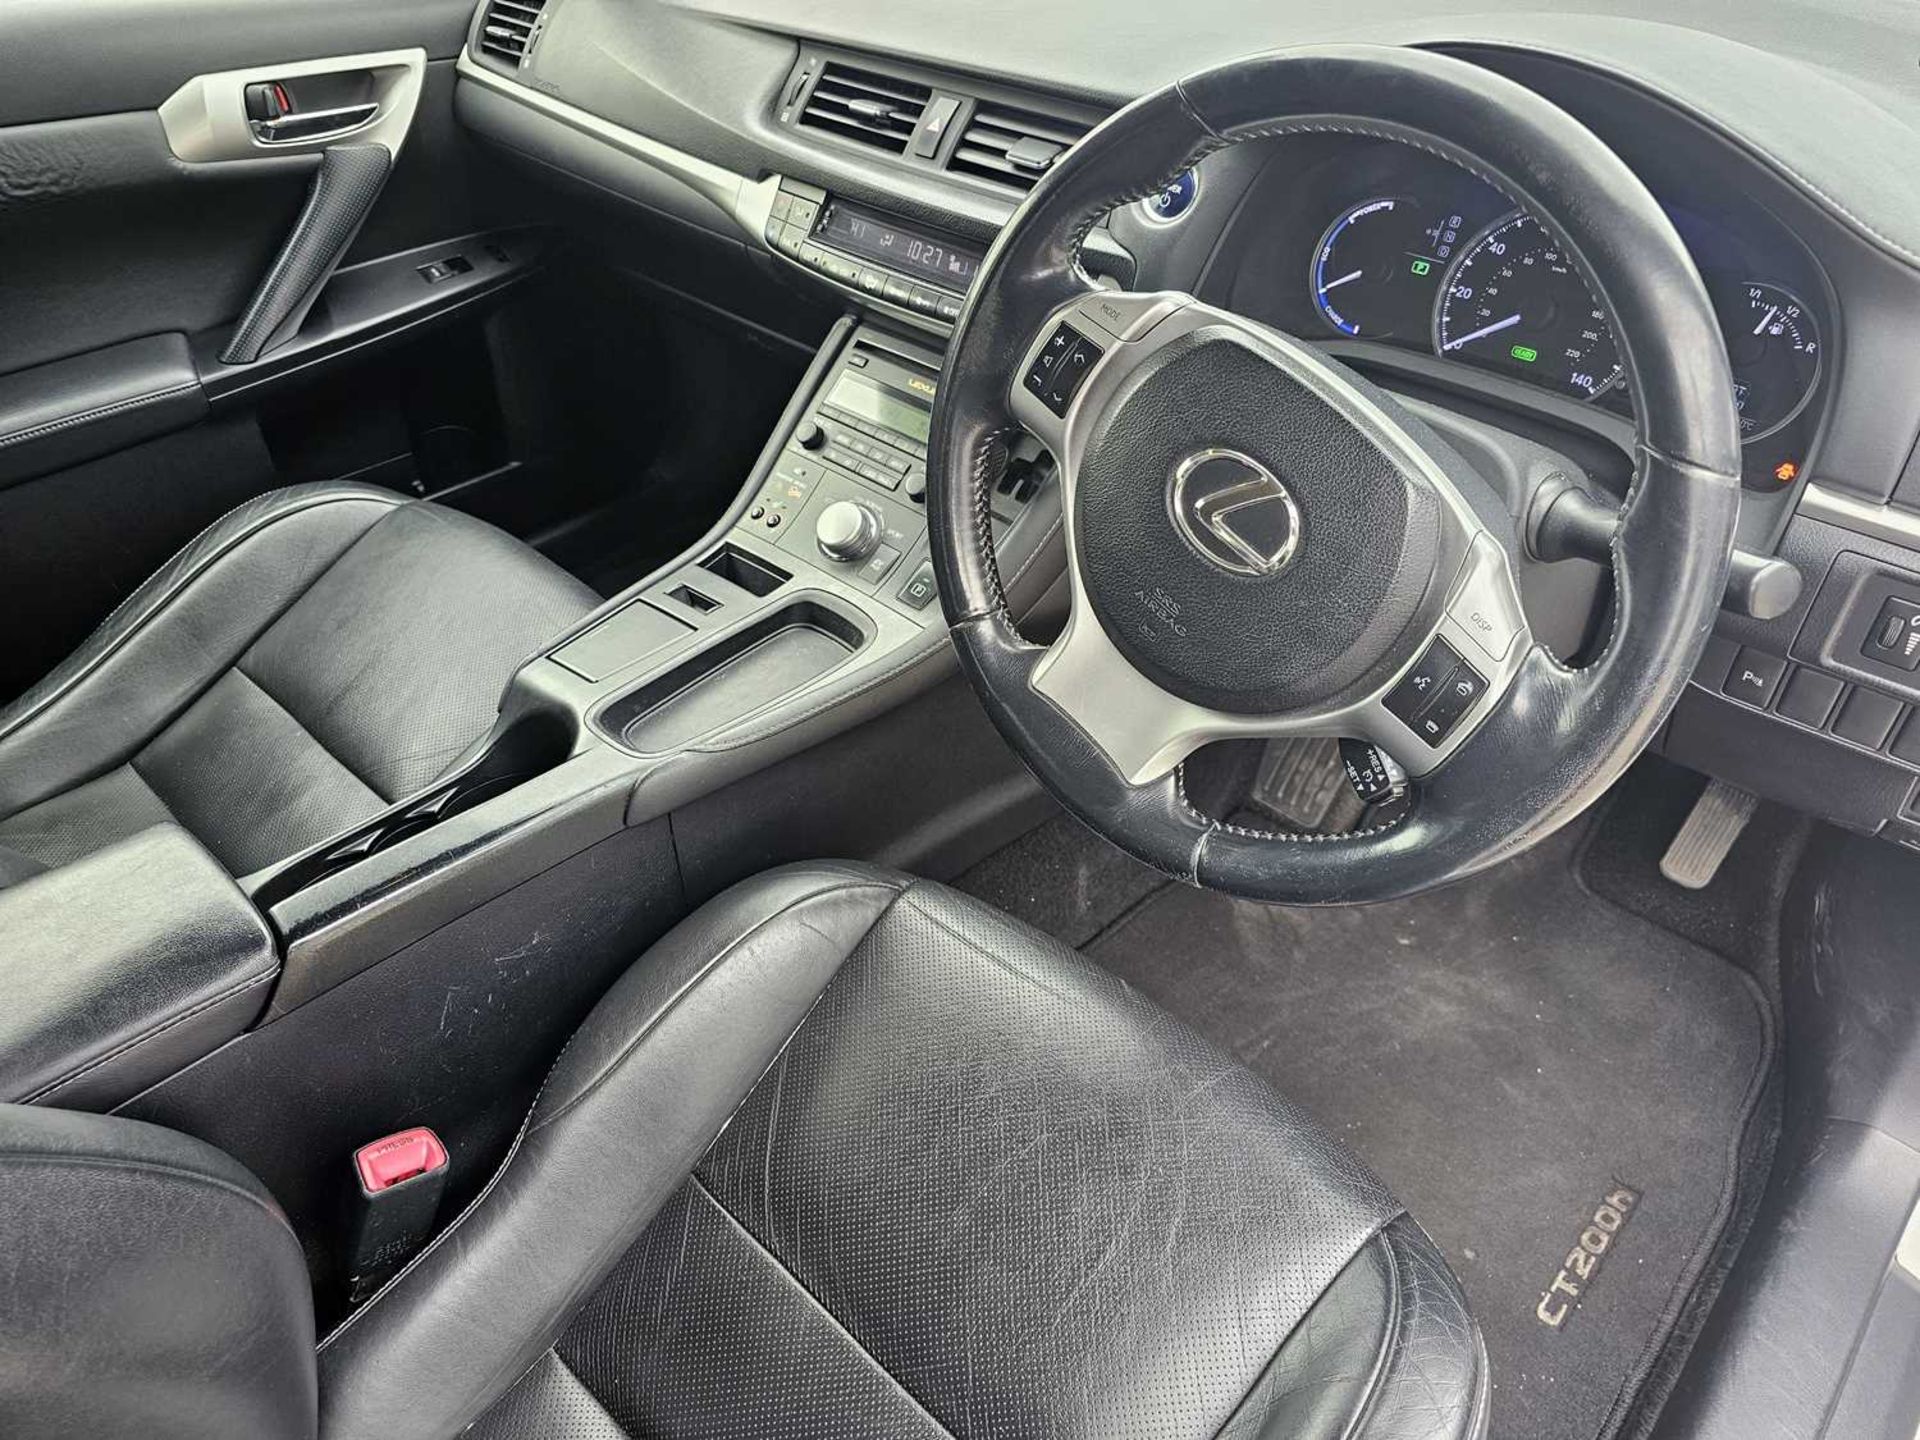 2011 Lexus CT200H Se-L Cvt Hybrid, Auto, Full Leather, Heated Seats, Bluetooth (NO VAT)(Reg. Docs. A - Image 20 of 26